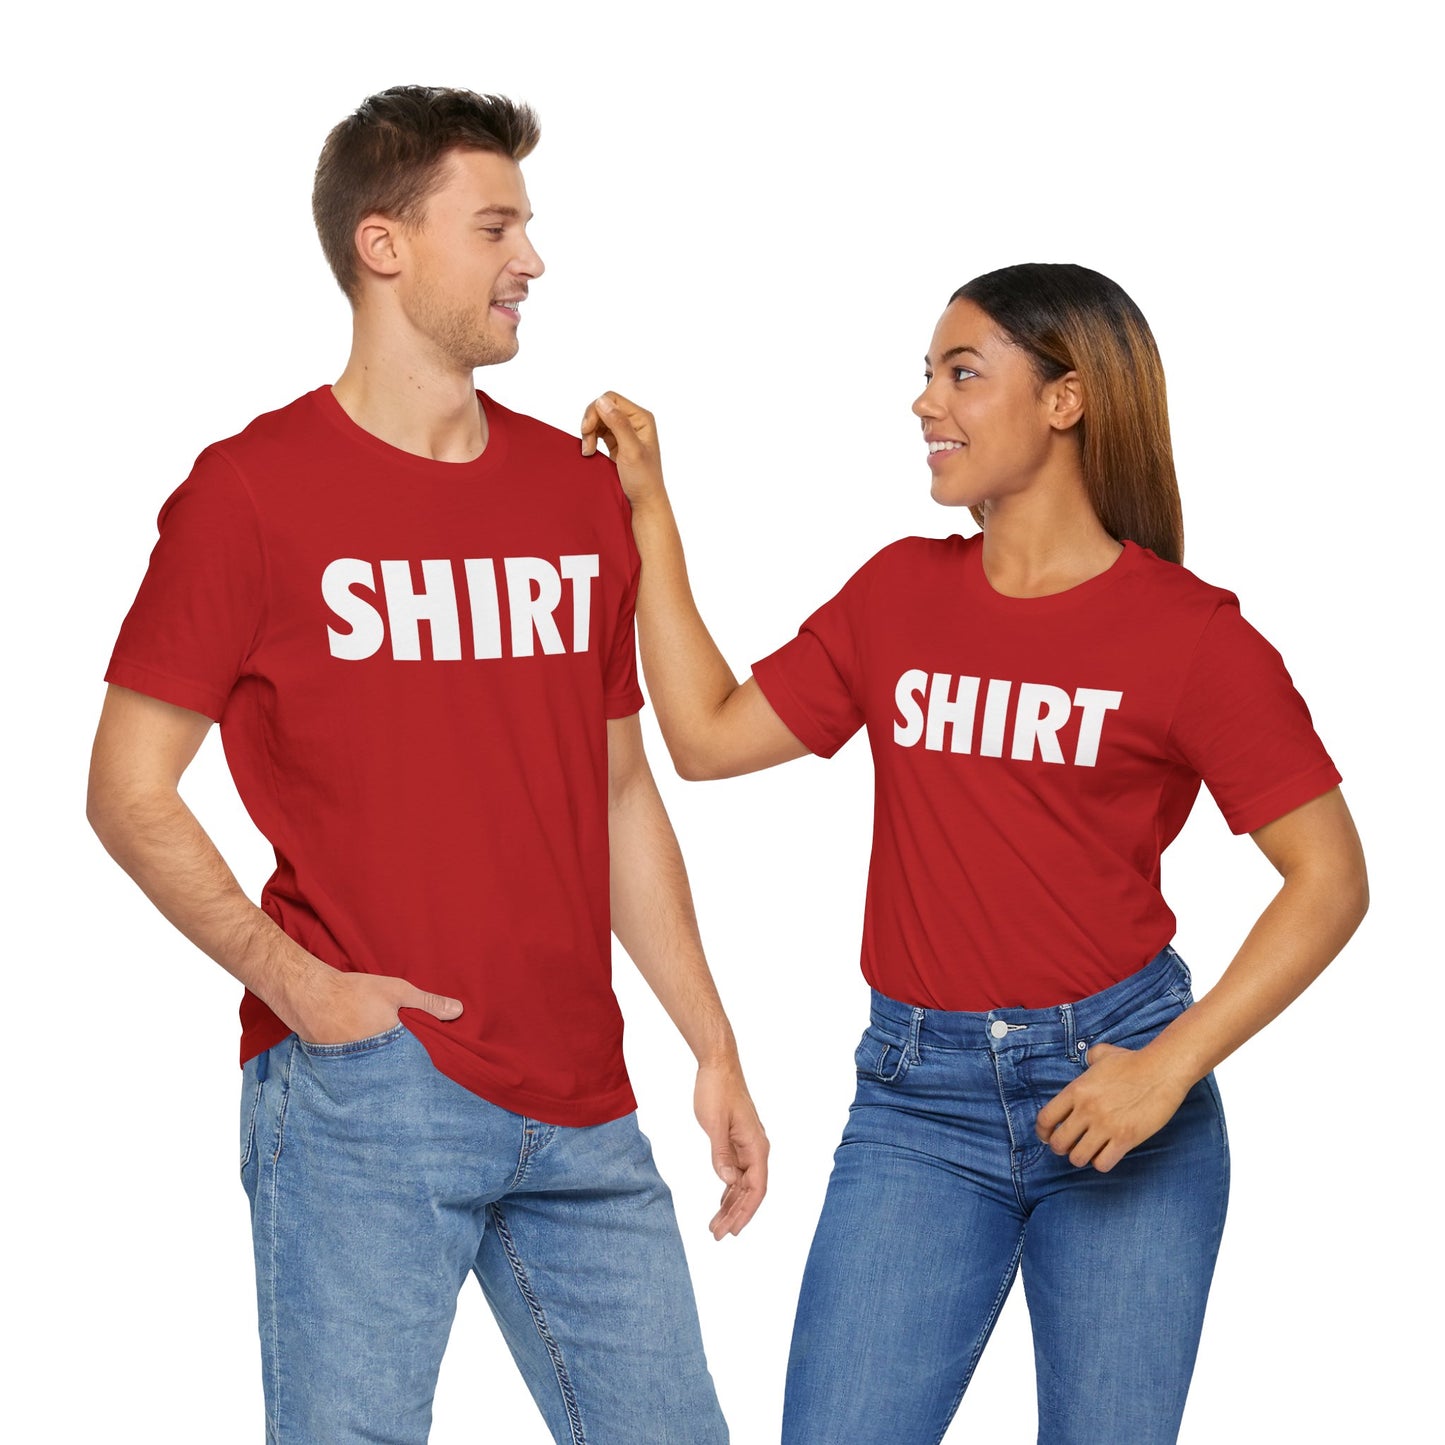 SHIRT Shirt (white text) - Unisex Jersey Short Sleeve Tee - The Gamers